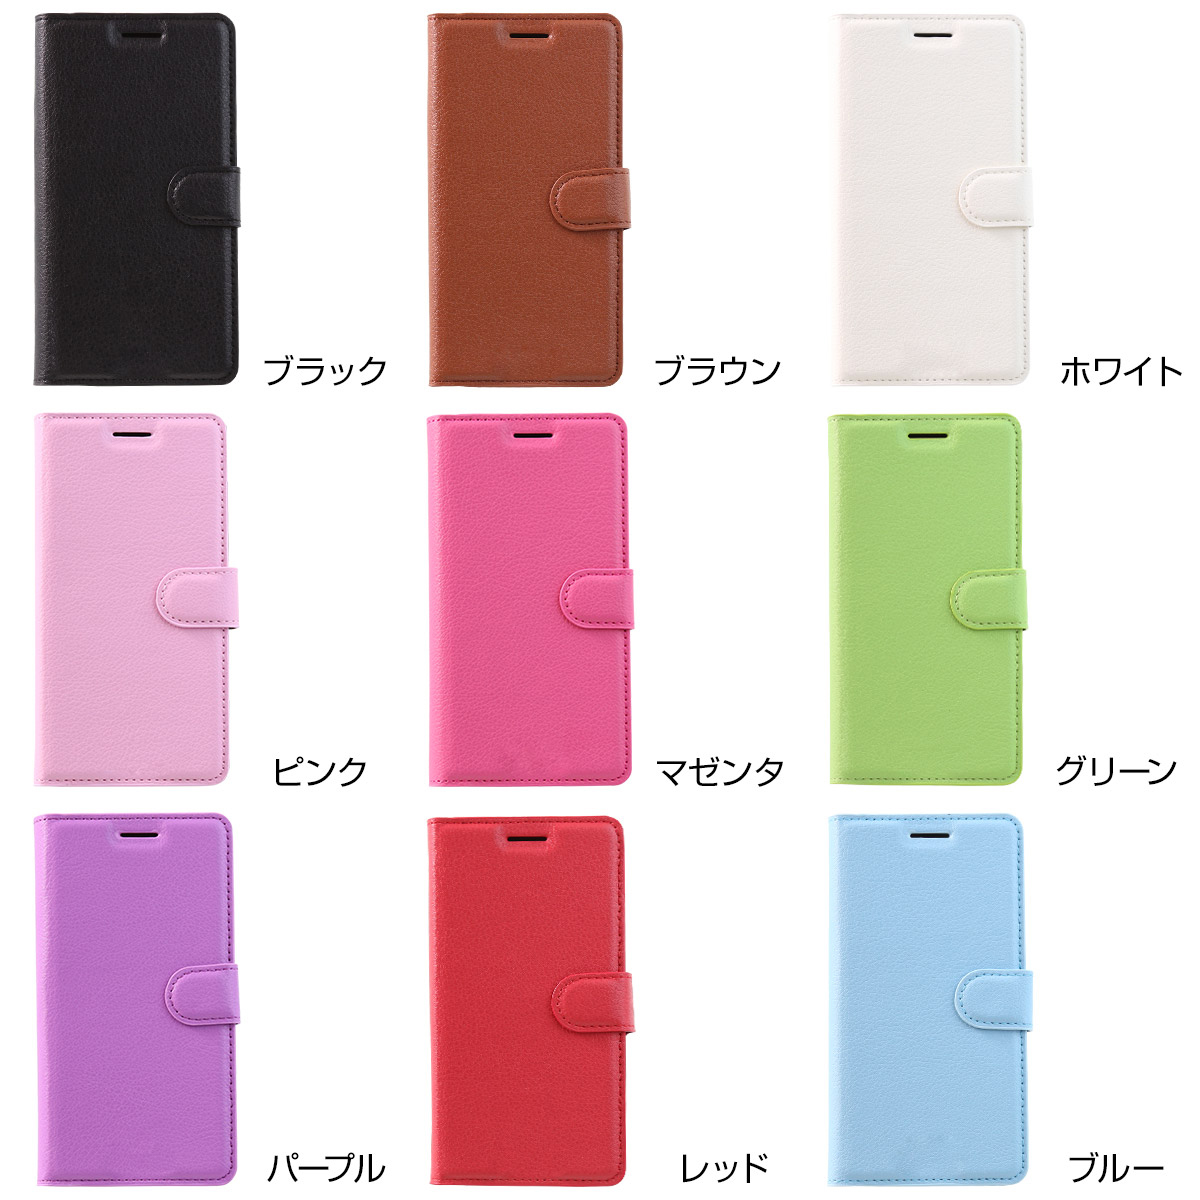 Galaxy Note9 SC-01L SCV40 レザー手帳型ケース